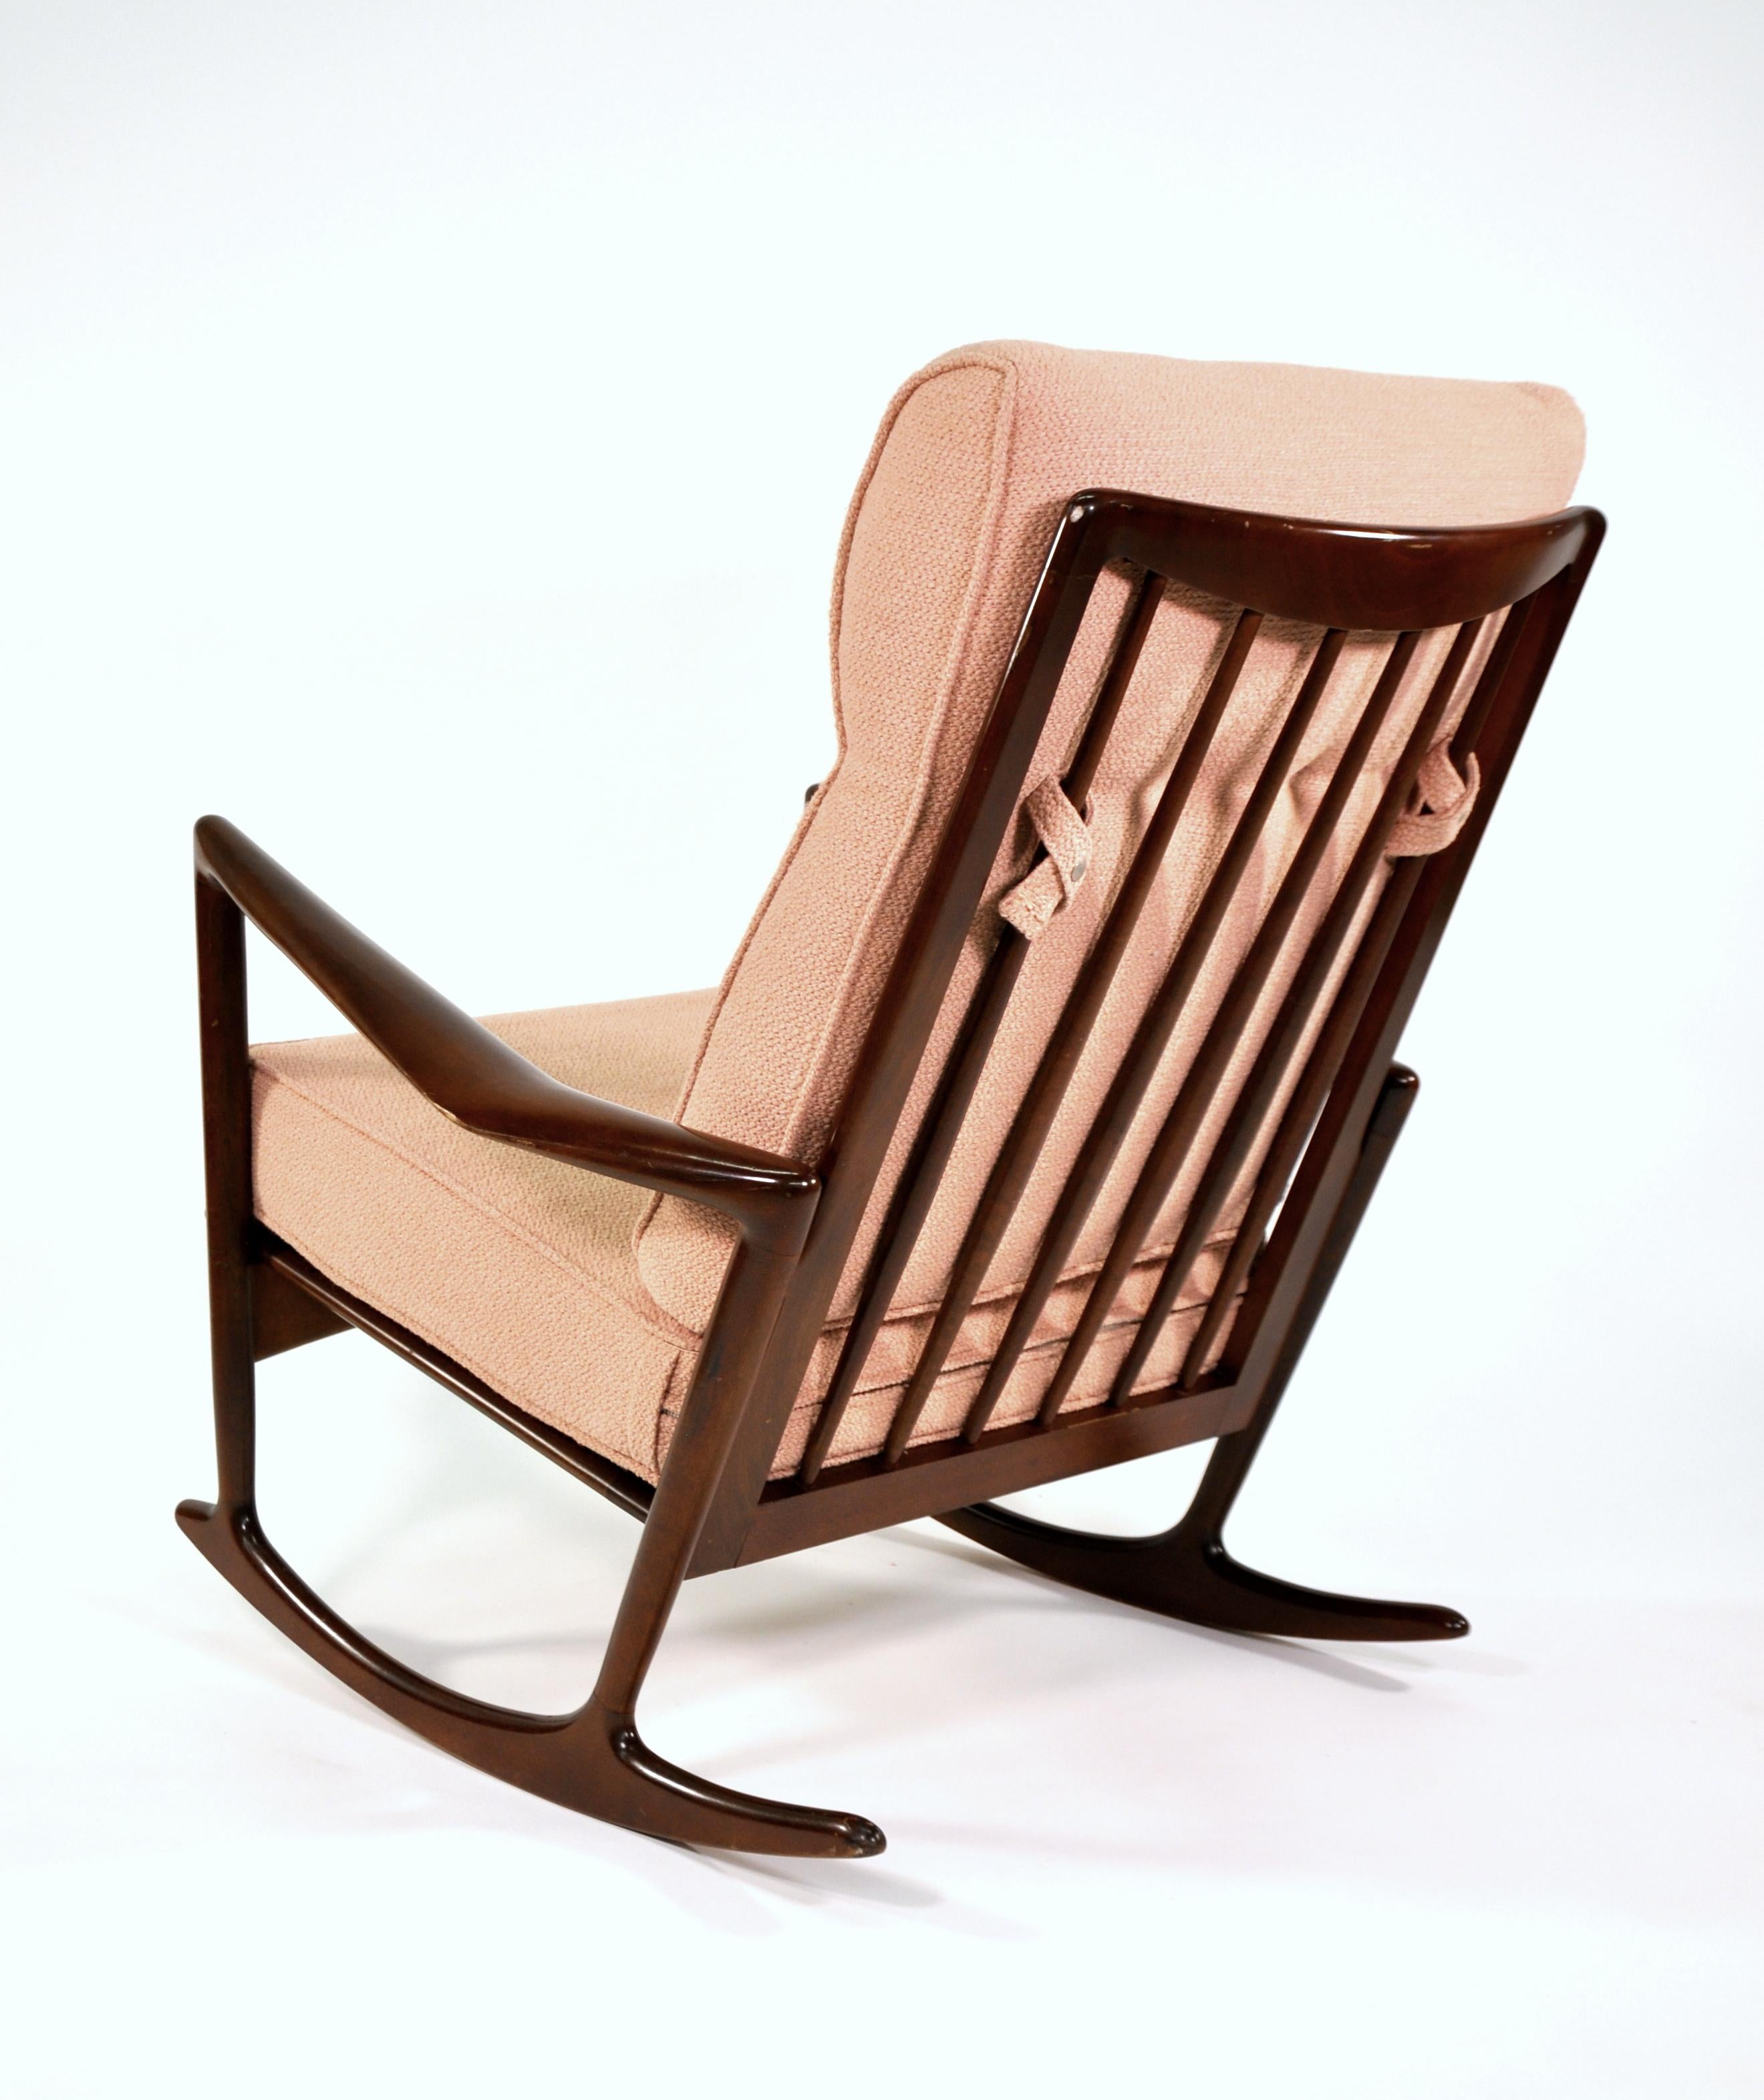 Mid-Century Modern Ib Kofod-Larsen Sculptural Rocking Chair for Selig